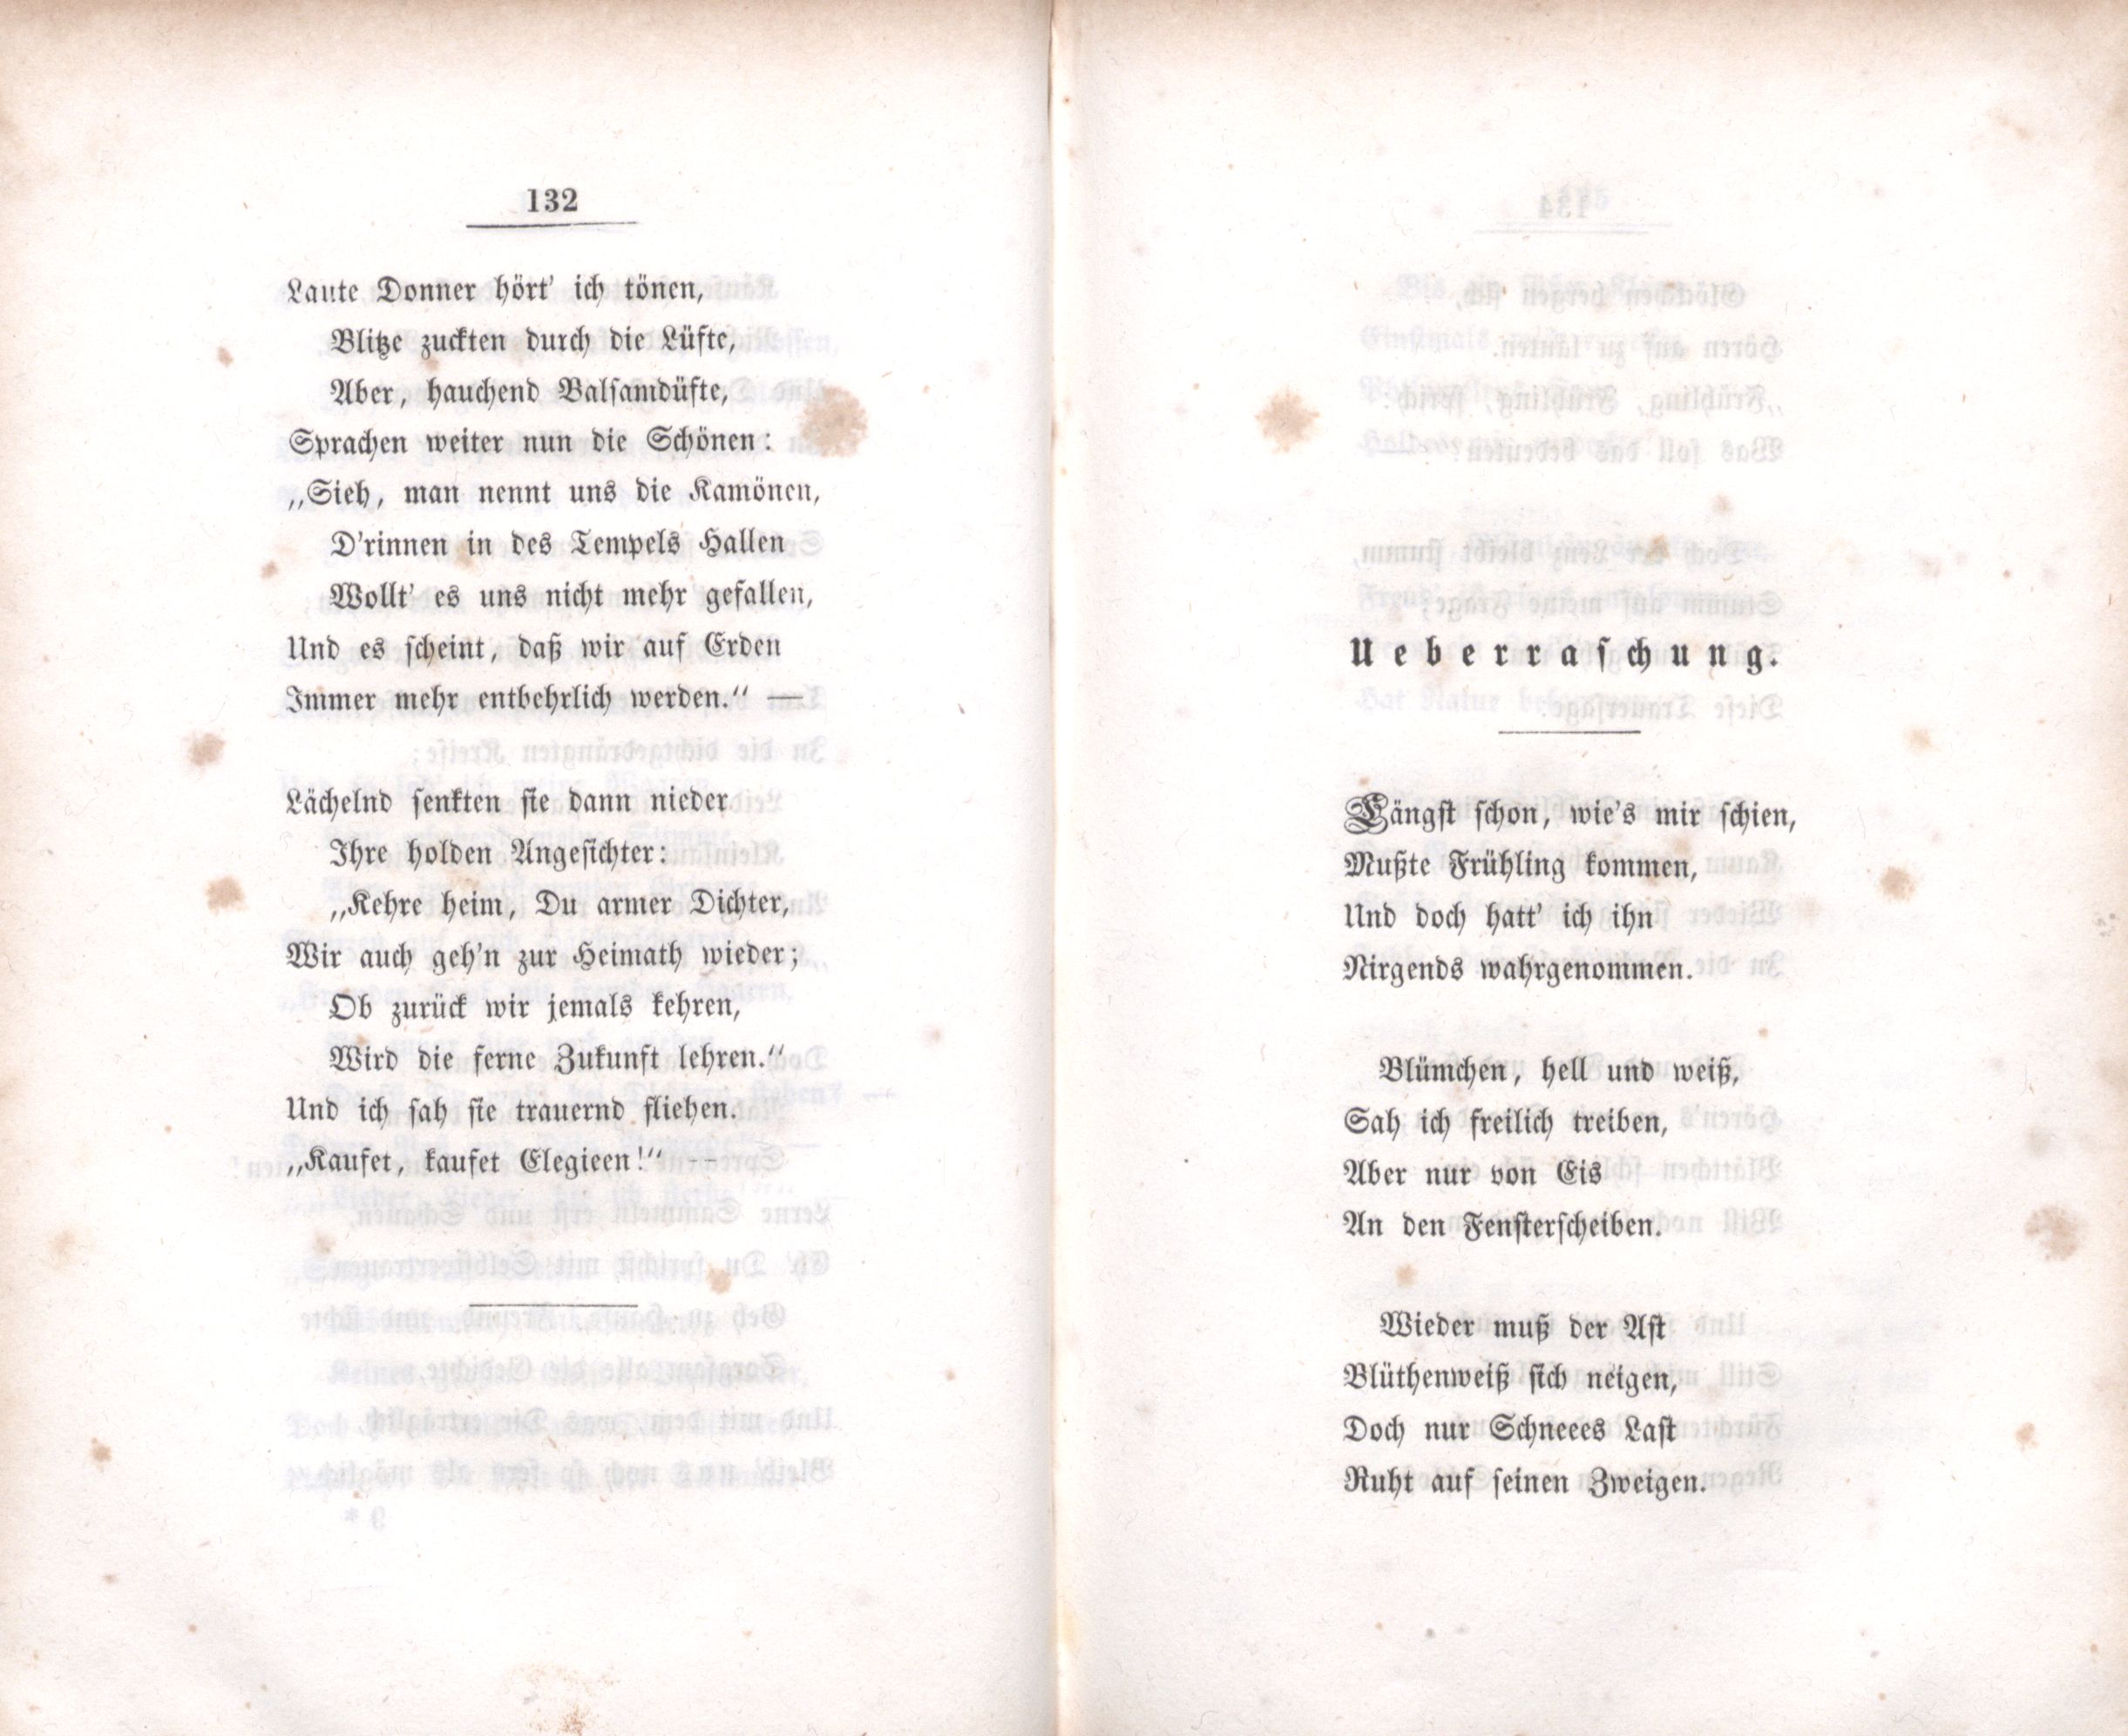 Ueberraschung (1848) | 1. (132-133) Main body of text